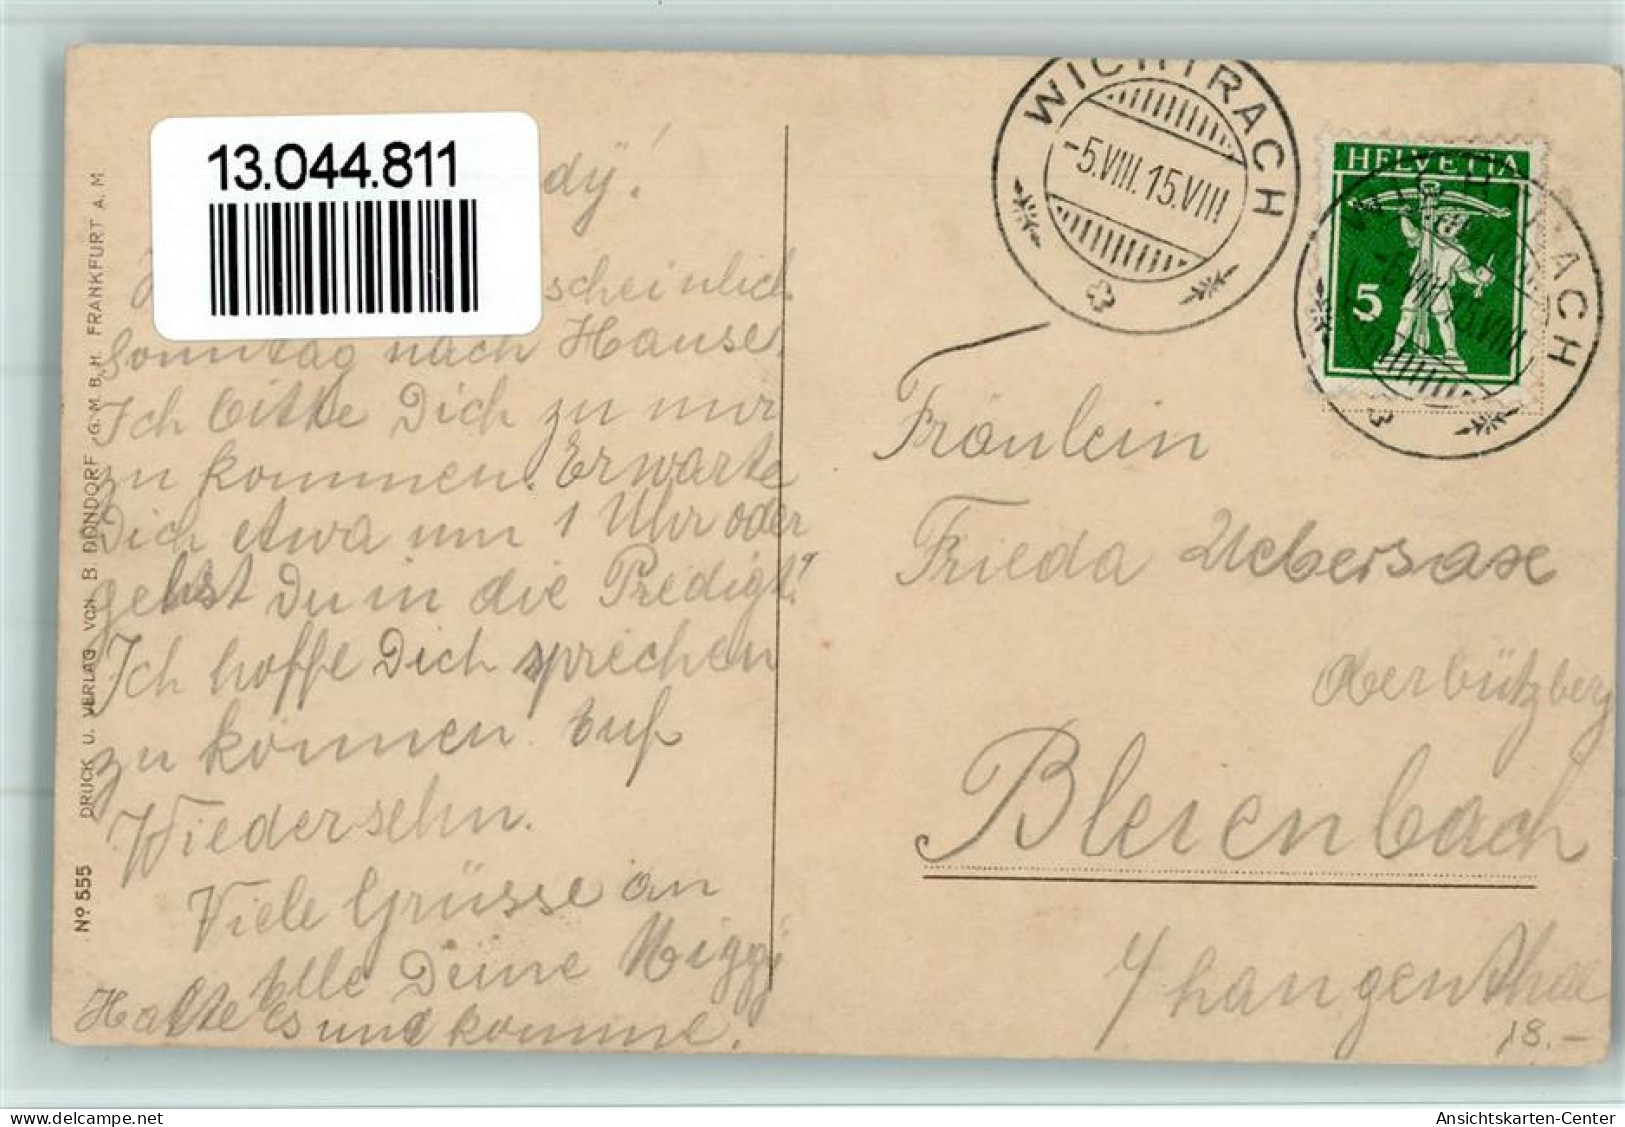 13044811 - Parkinson Ethel Flicktag - Hollandkinder - Parkinson, Ethel